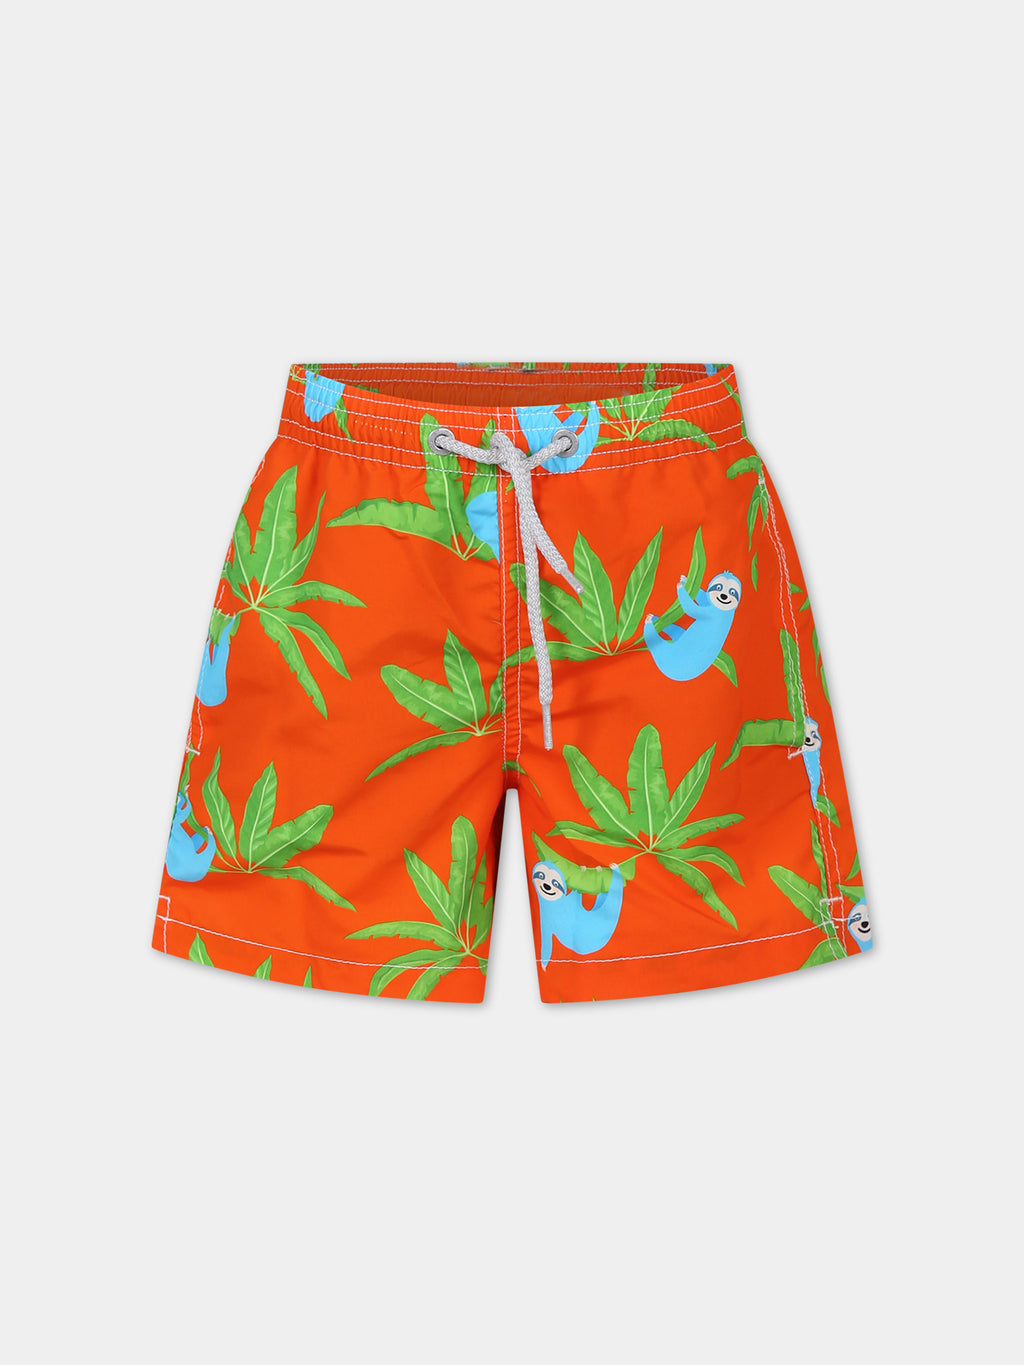 Orange swim shorts for boy with sloth print